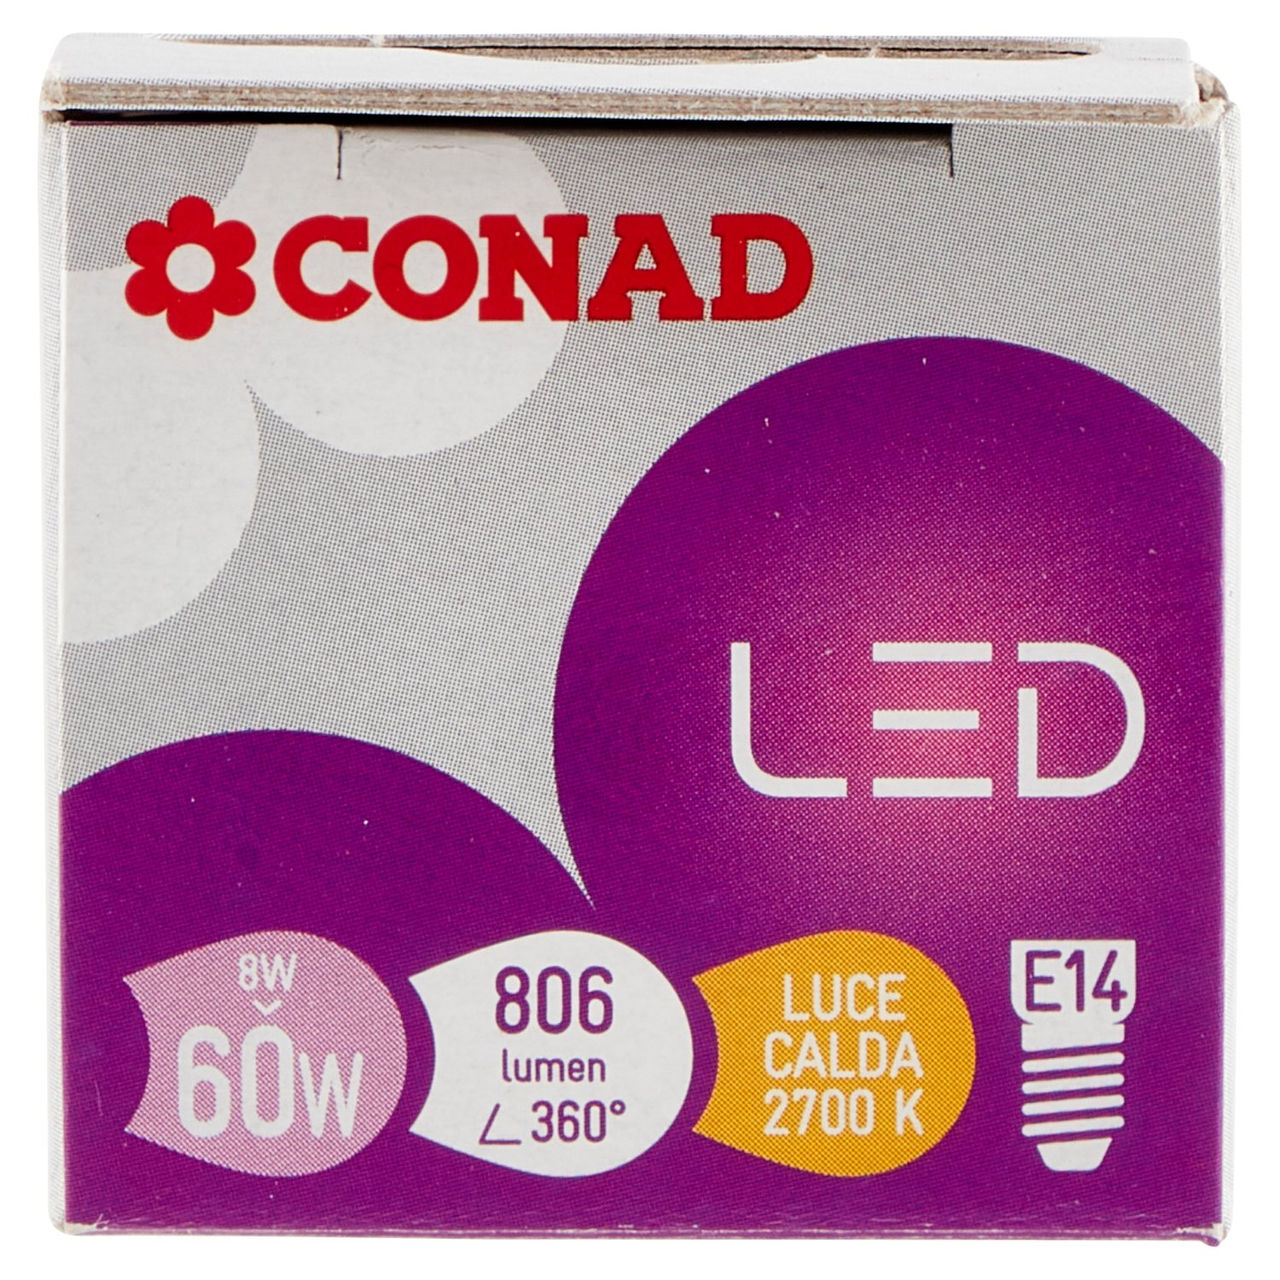 CONAD Led 8W 806 Lumen E14 Luce Calda